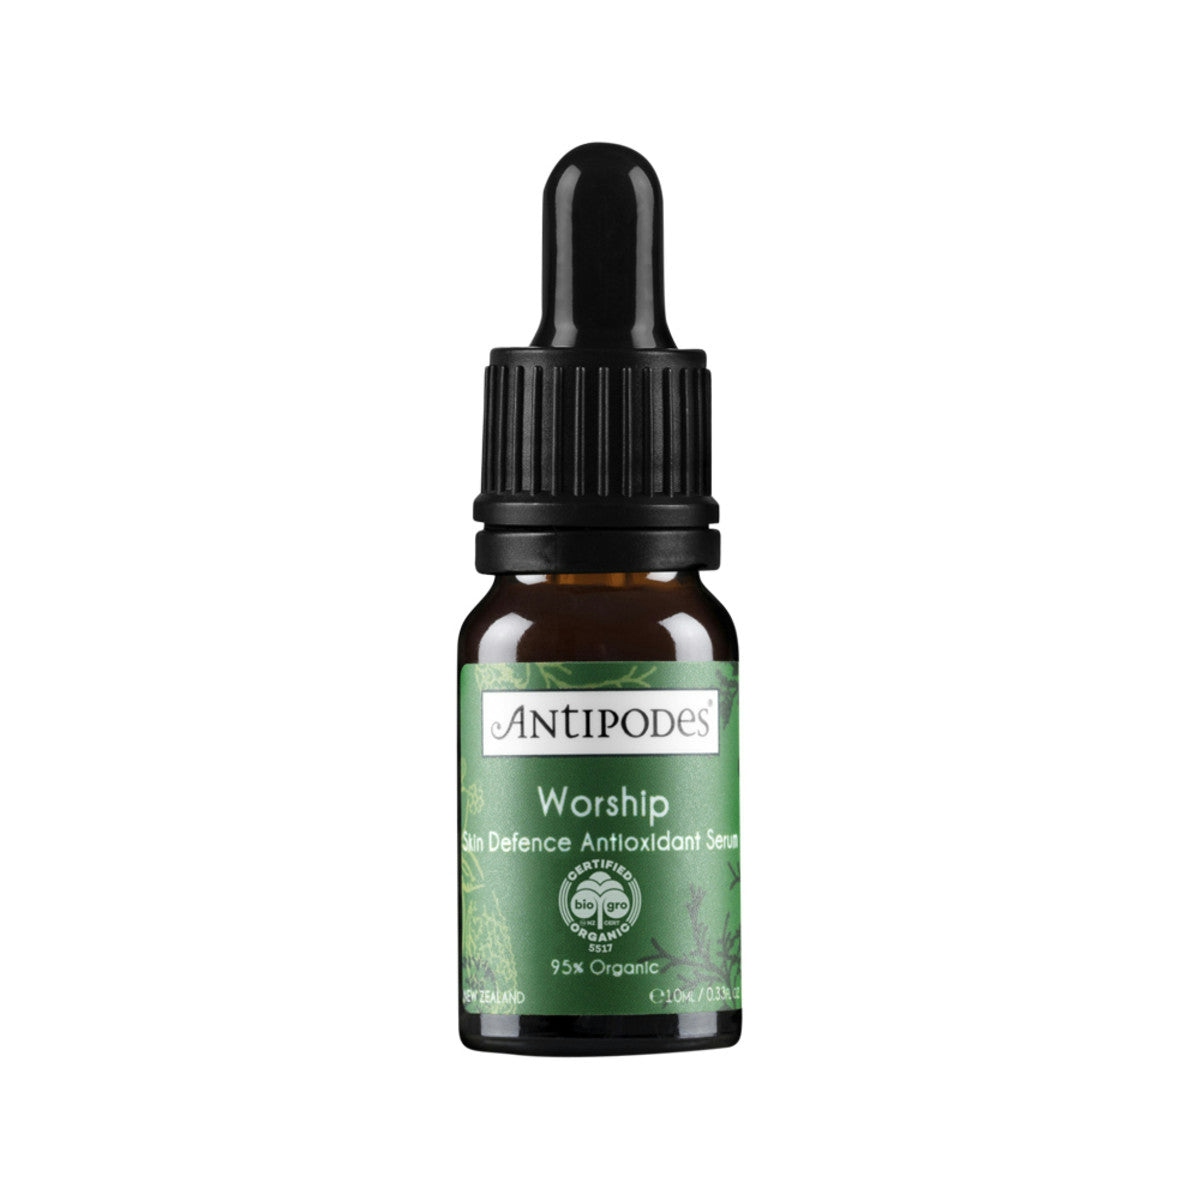 image of Antipodes Organic Worship Skin Defence Antioxidant Serum 10ml on white background 